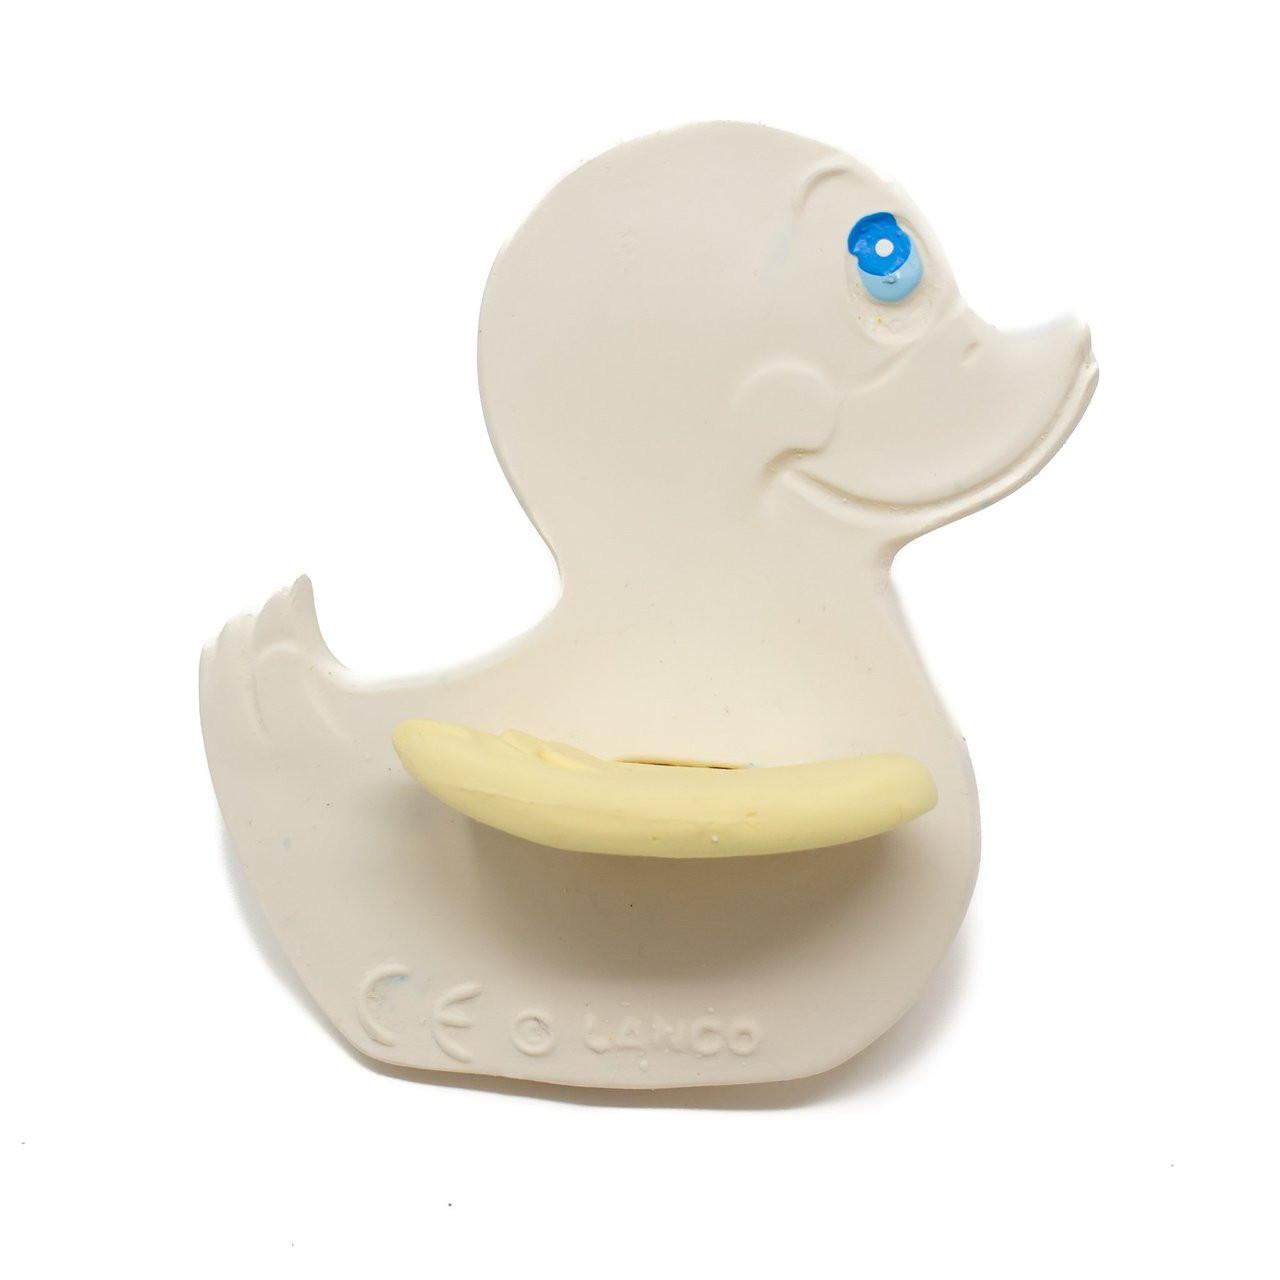 Sealed Rubber Duck Bath Toy, Hevea